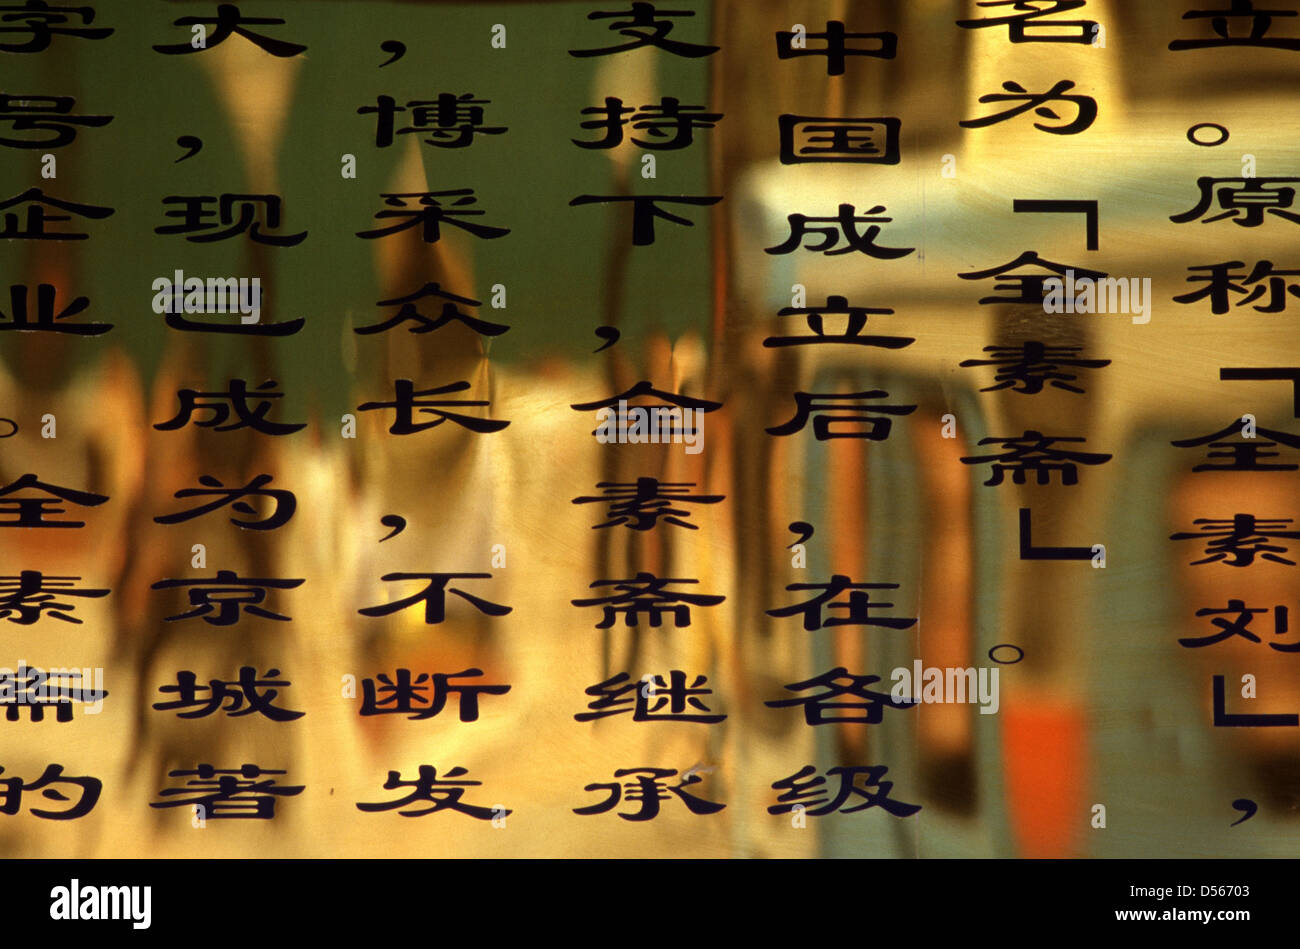 Chinesische Kalligraphie auf Metalloberfläche Stockfoto